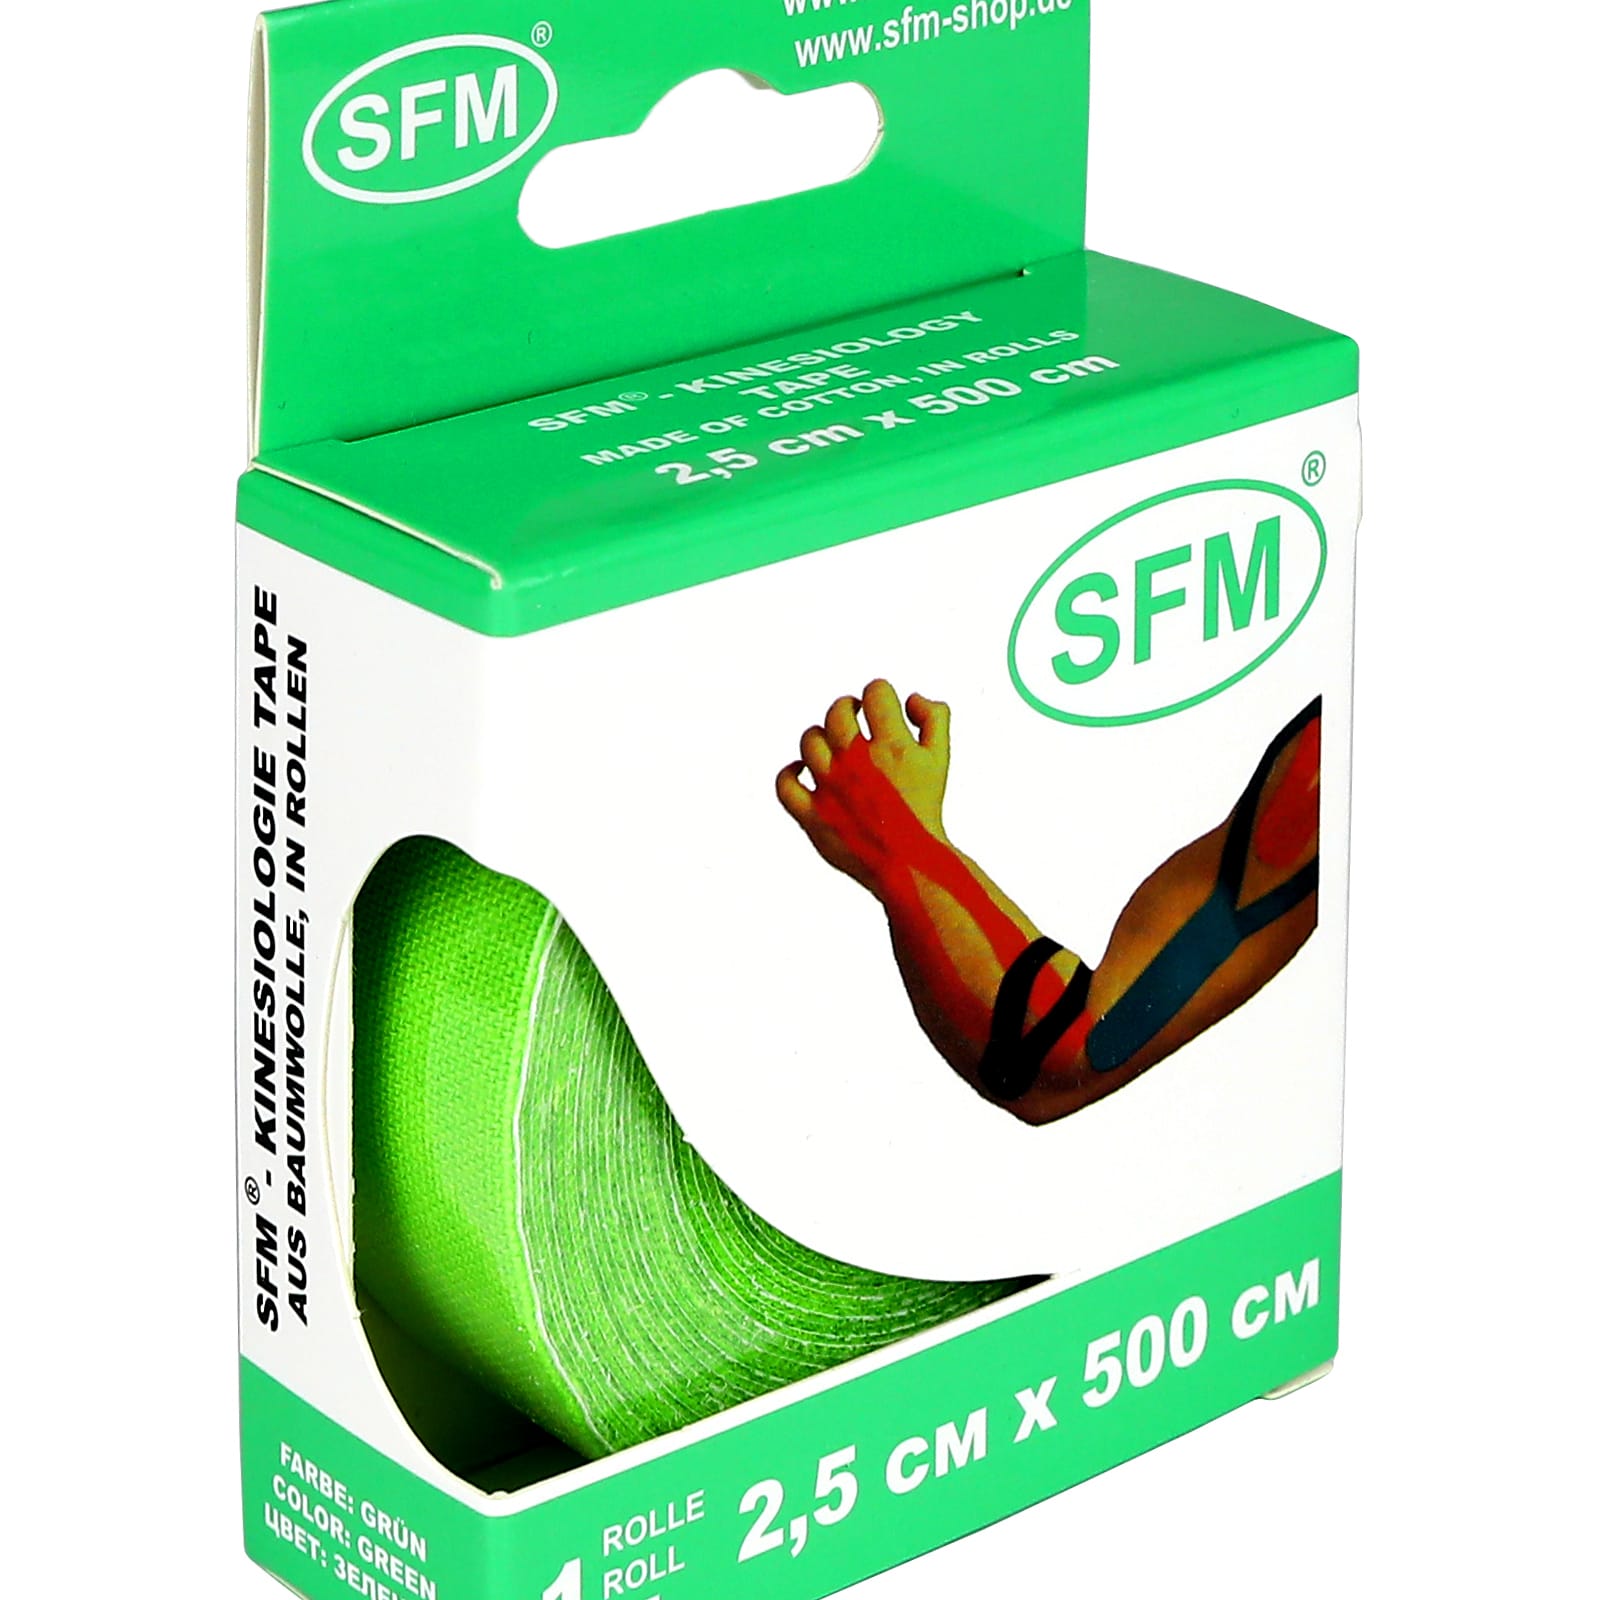 Кинезиотейп SFM Hospital Products Plaster на хлопковой основе 2.5х500 см зеленого цвета в диспенсере - фото 1